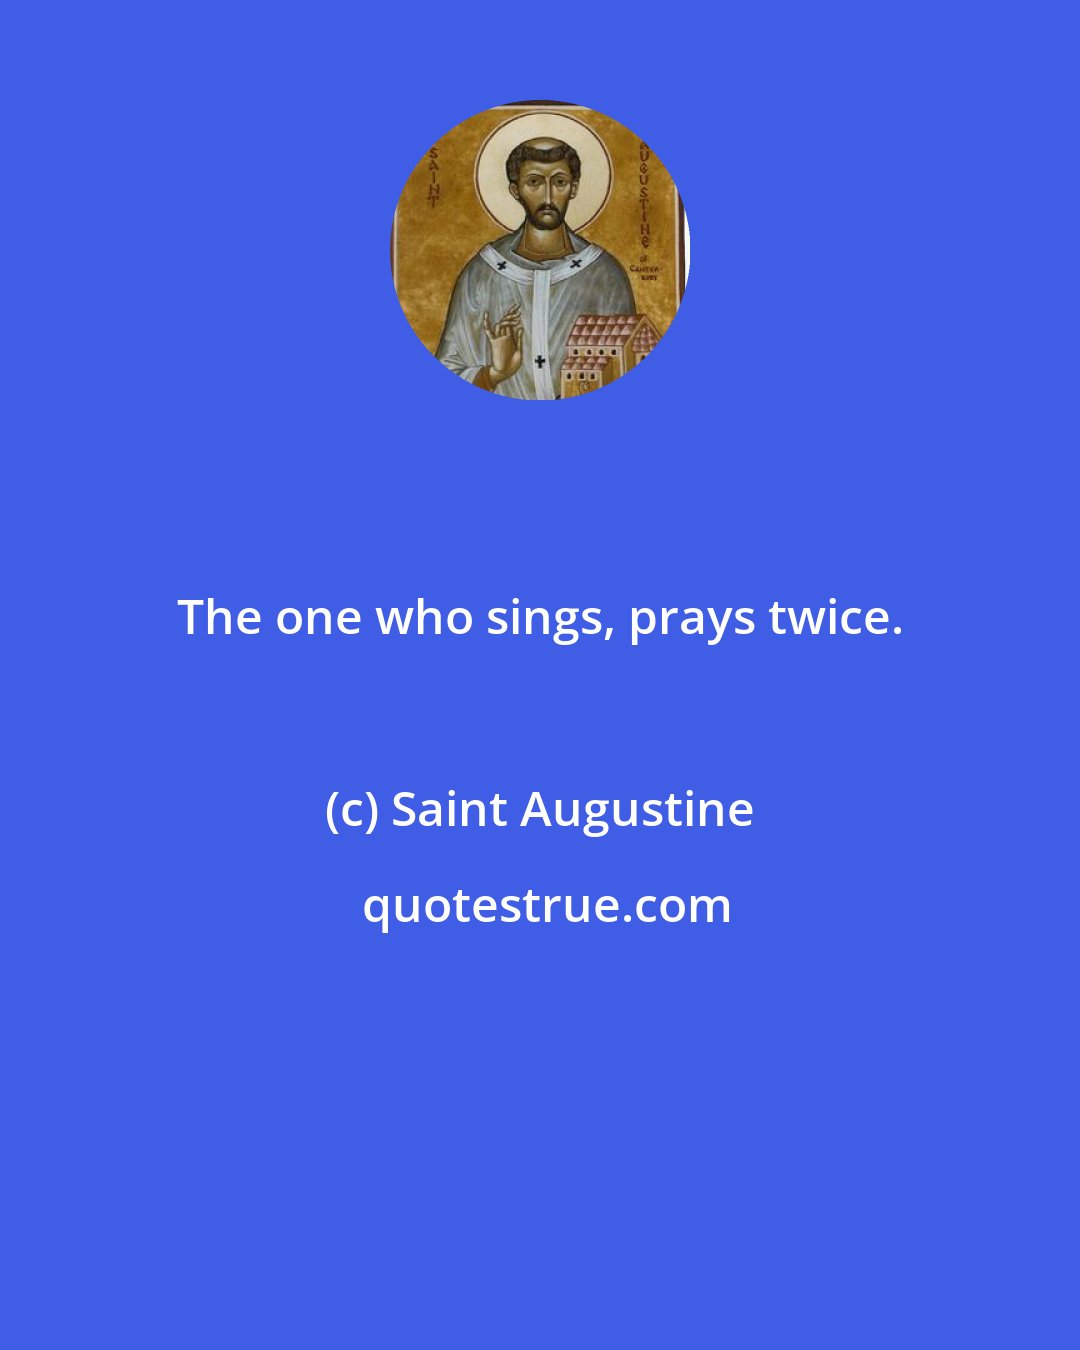 Saint Augustine: The one who sings, prays twice.